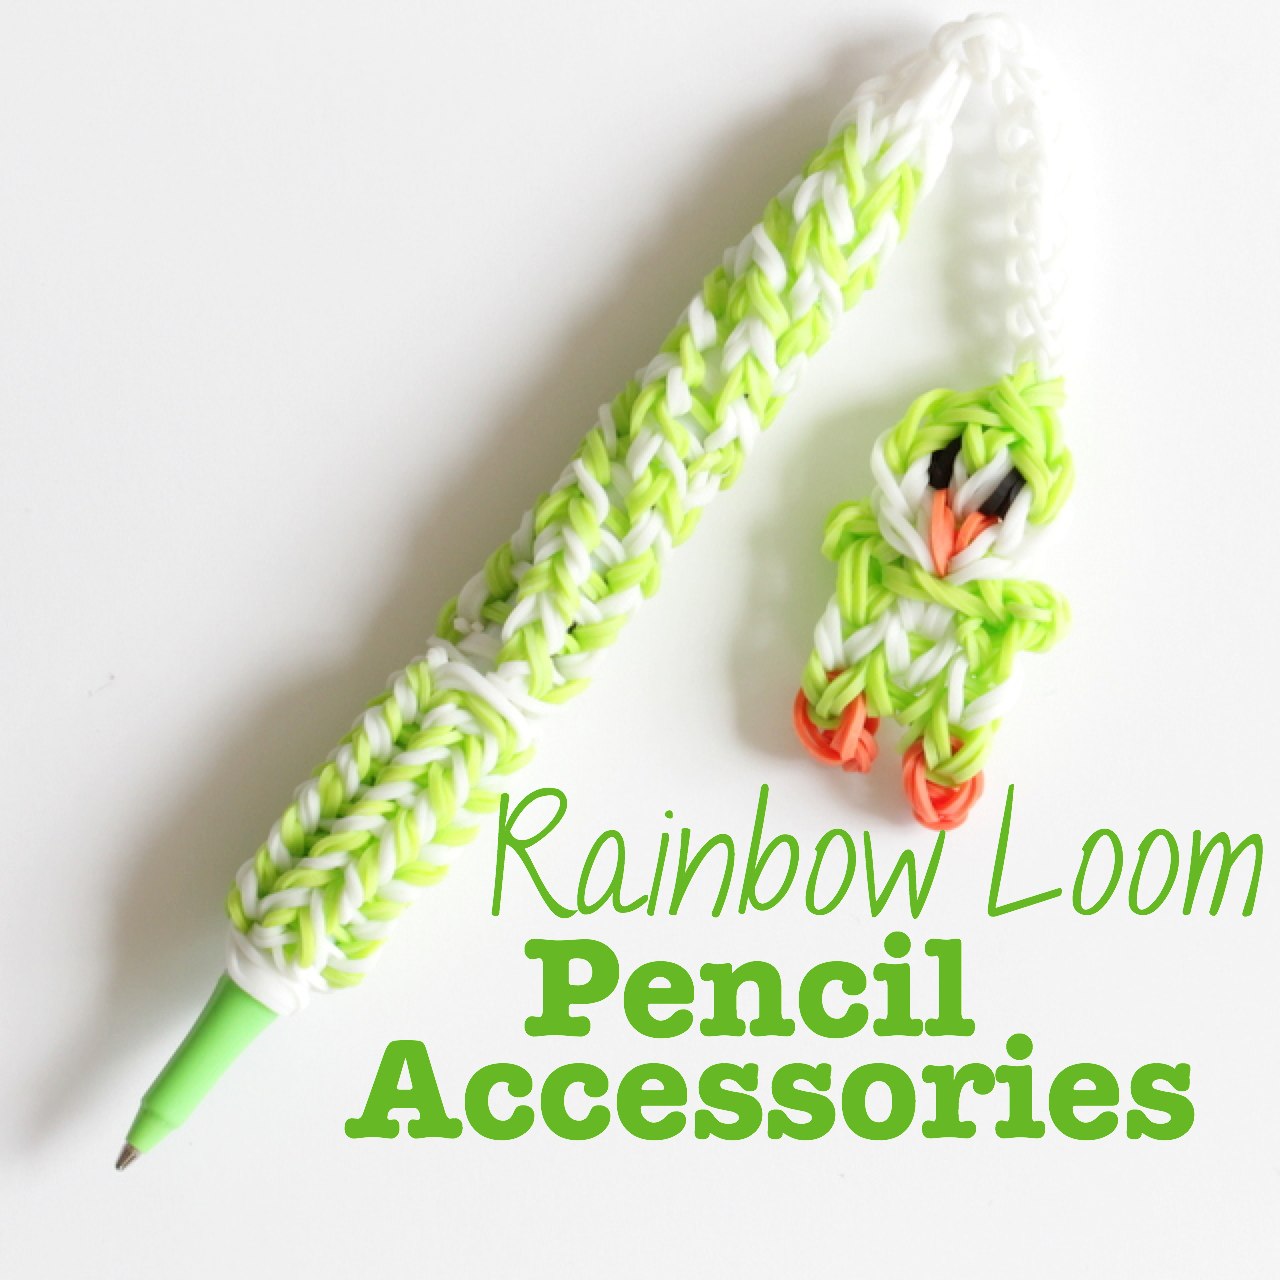 Rainbow Loom: Pen Accessories • The Crafty Mummy